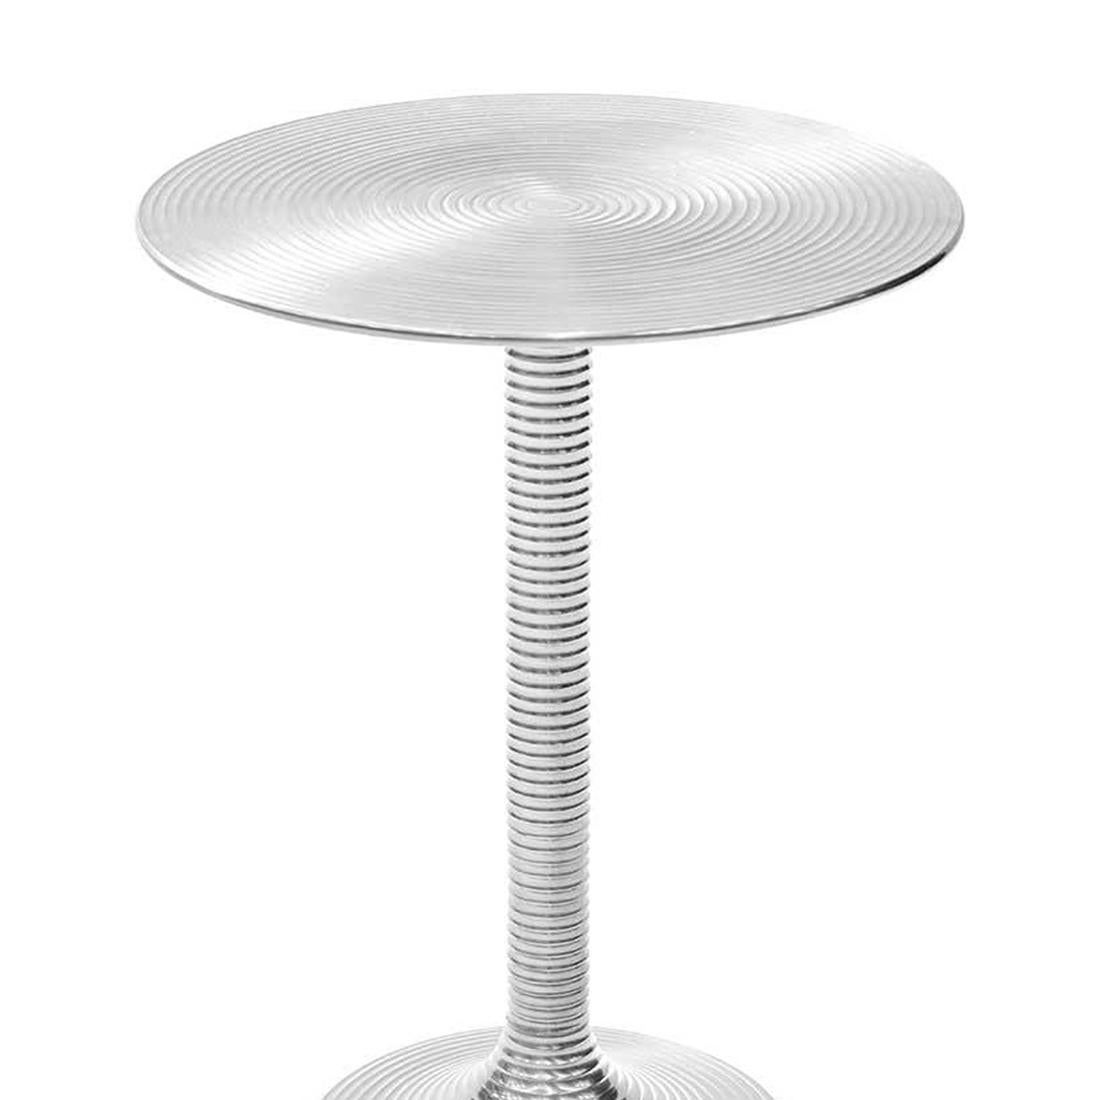 Table d'appoint Alu nickel in nickeled
aluminium encerclé.
Disponible également en table basse en nickel Alu.